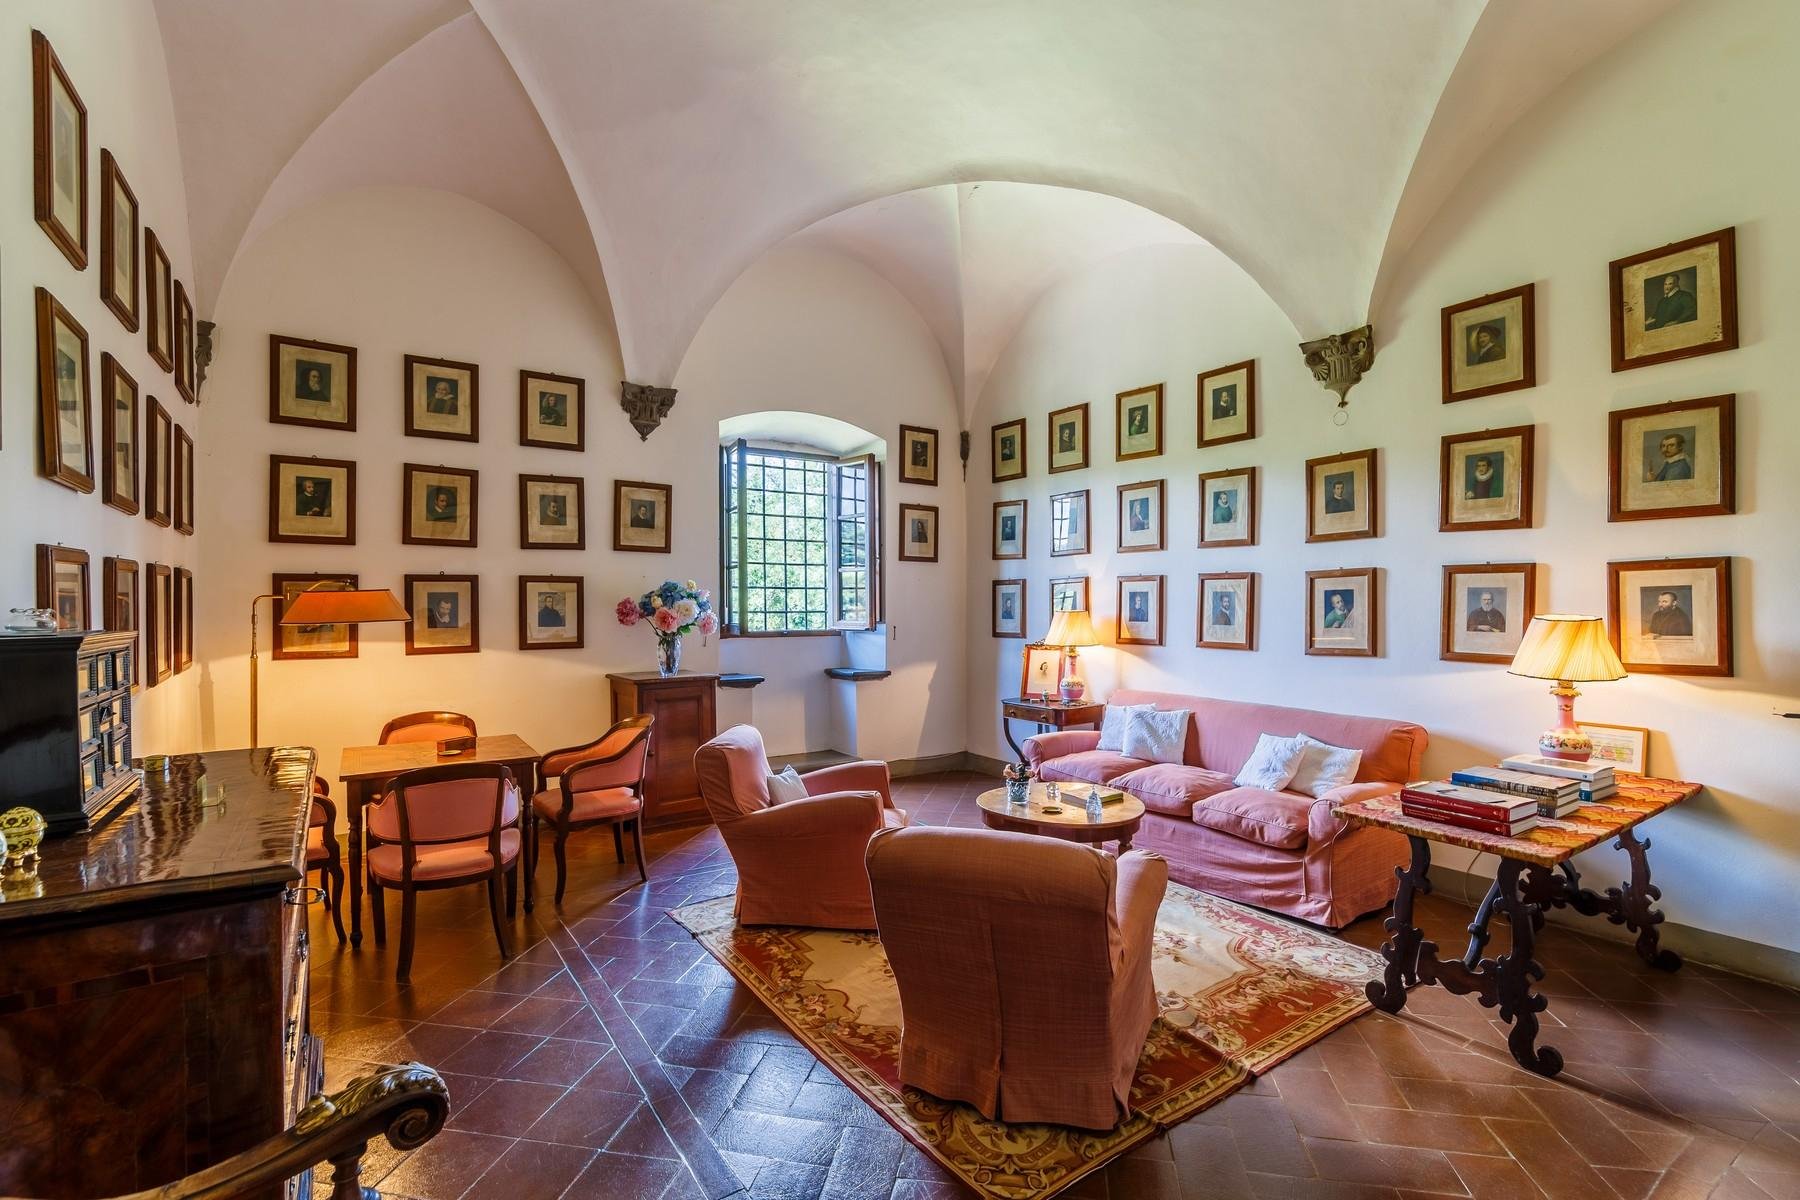 Francis York Medieval Castle Turned Renaissance Villa in Tuscany, Italy  00016.jpg